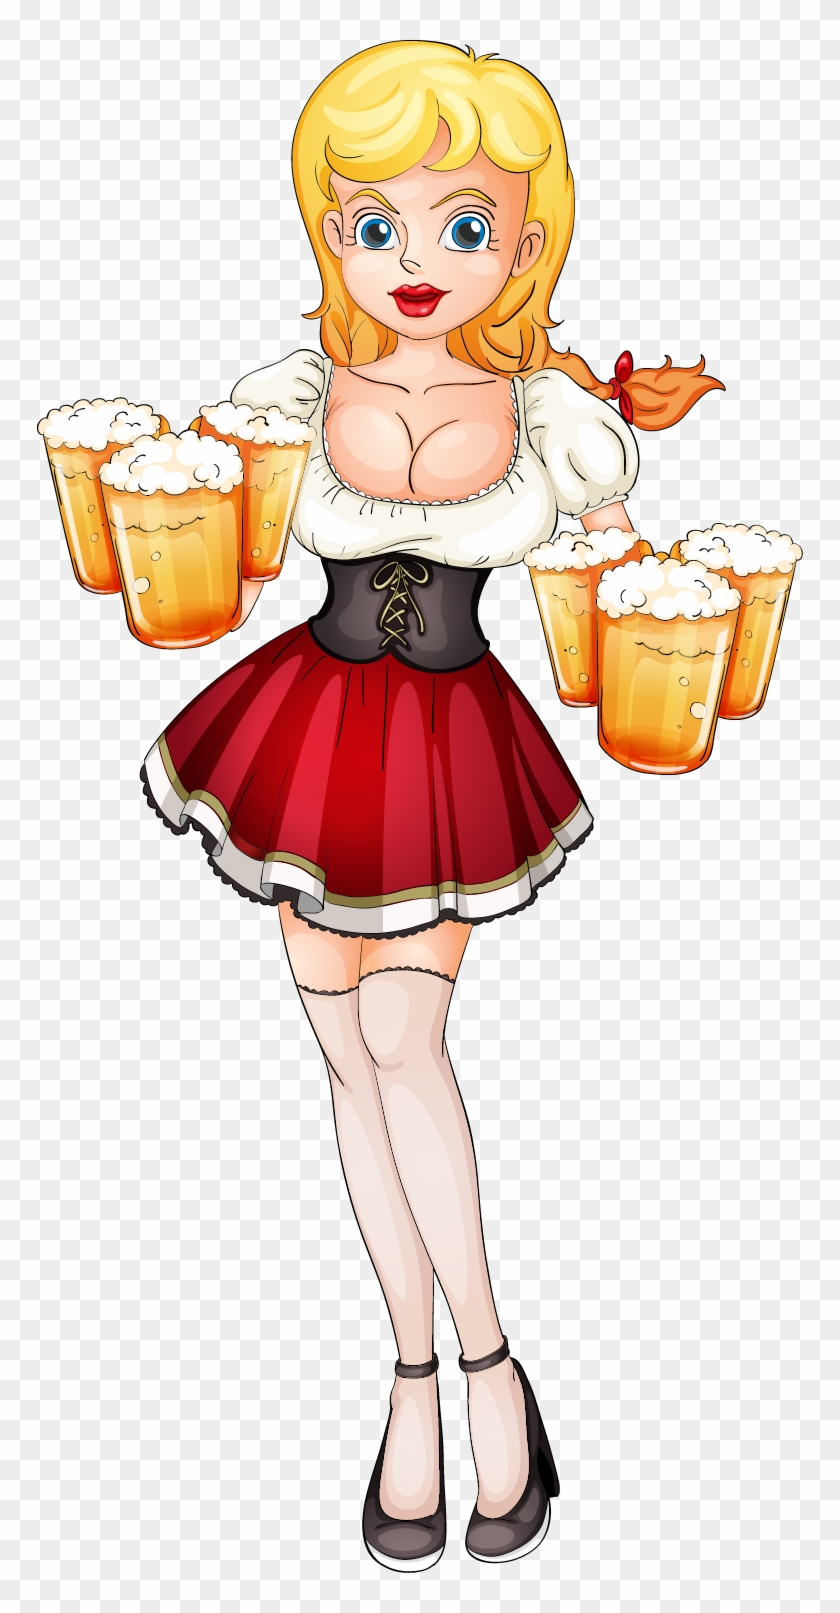 Oktoberfest Beer Cartoon Illustration - Illustration Of A Waitress With Six Oval Ornament #944868